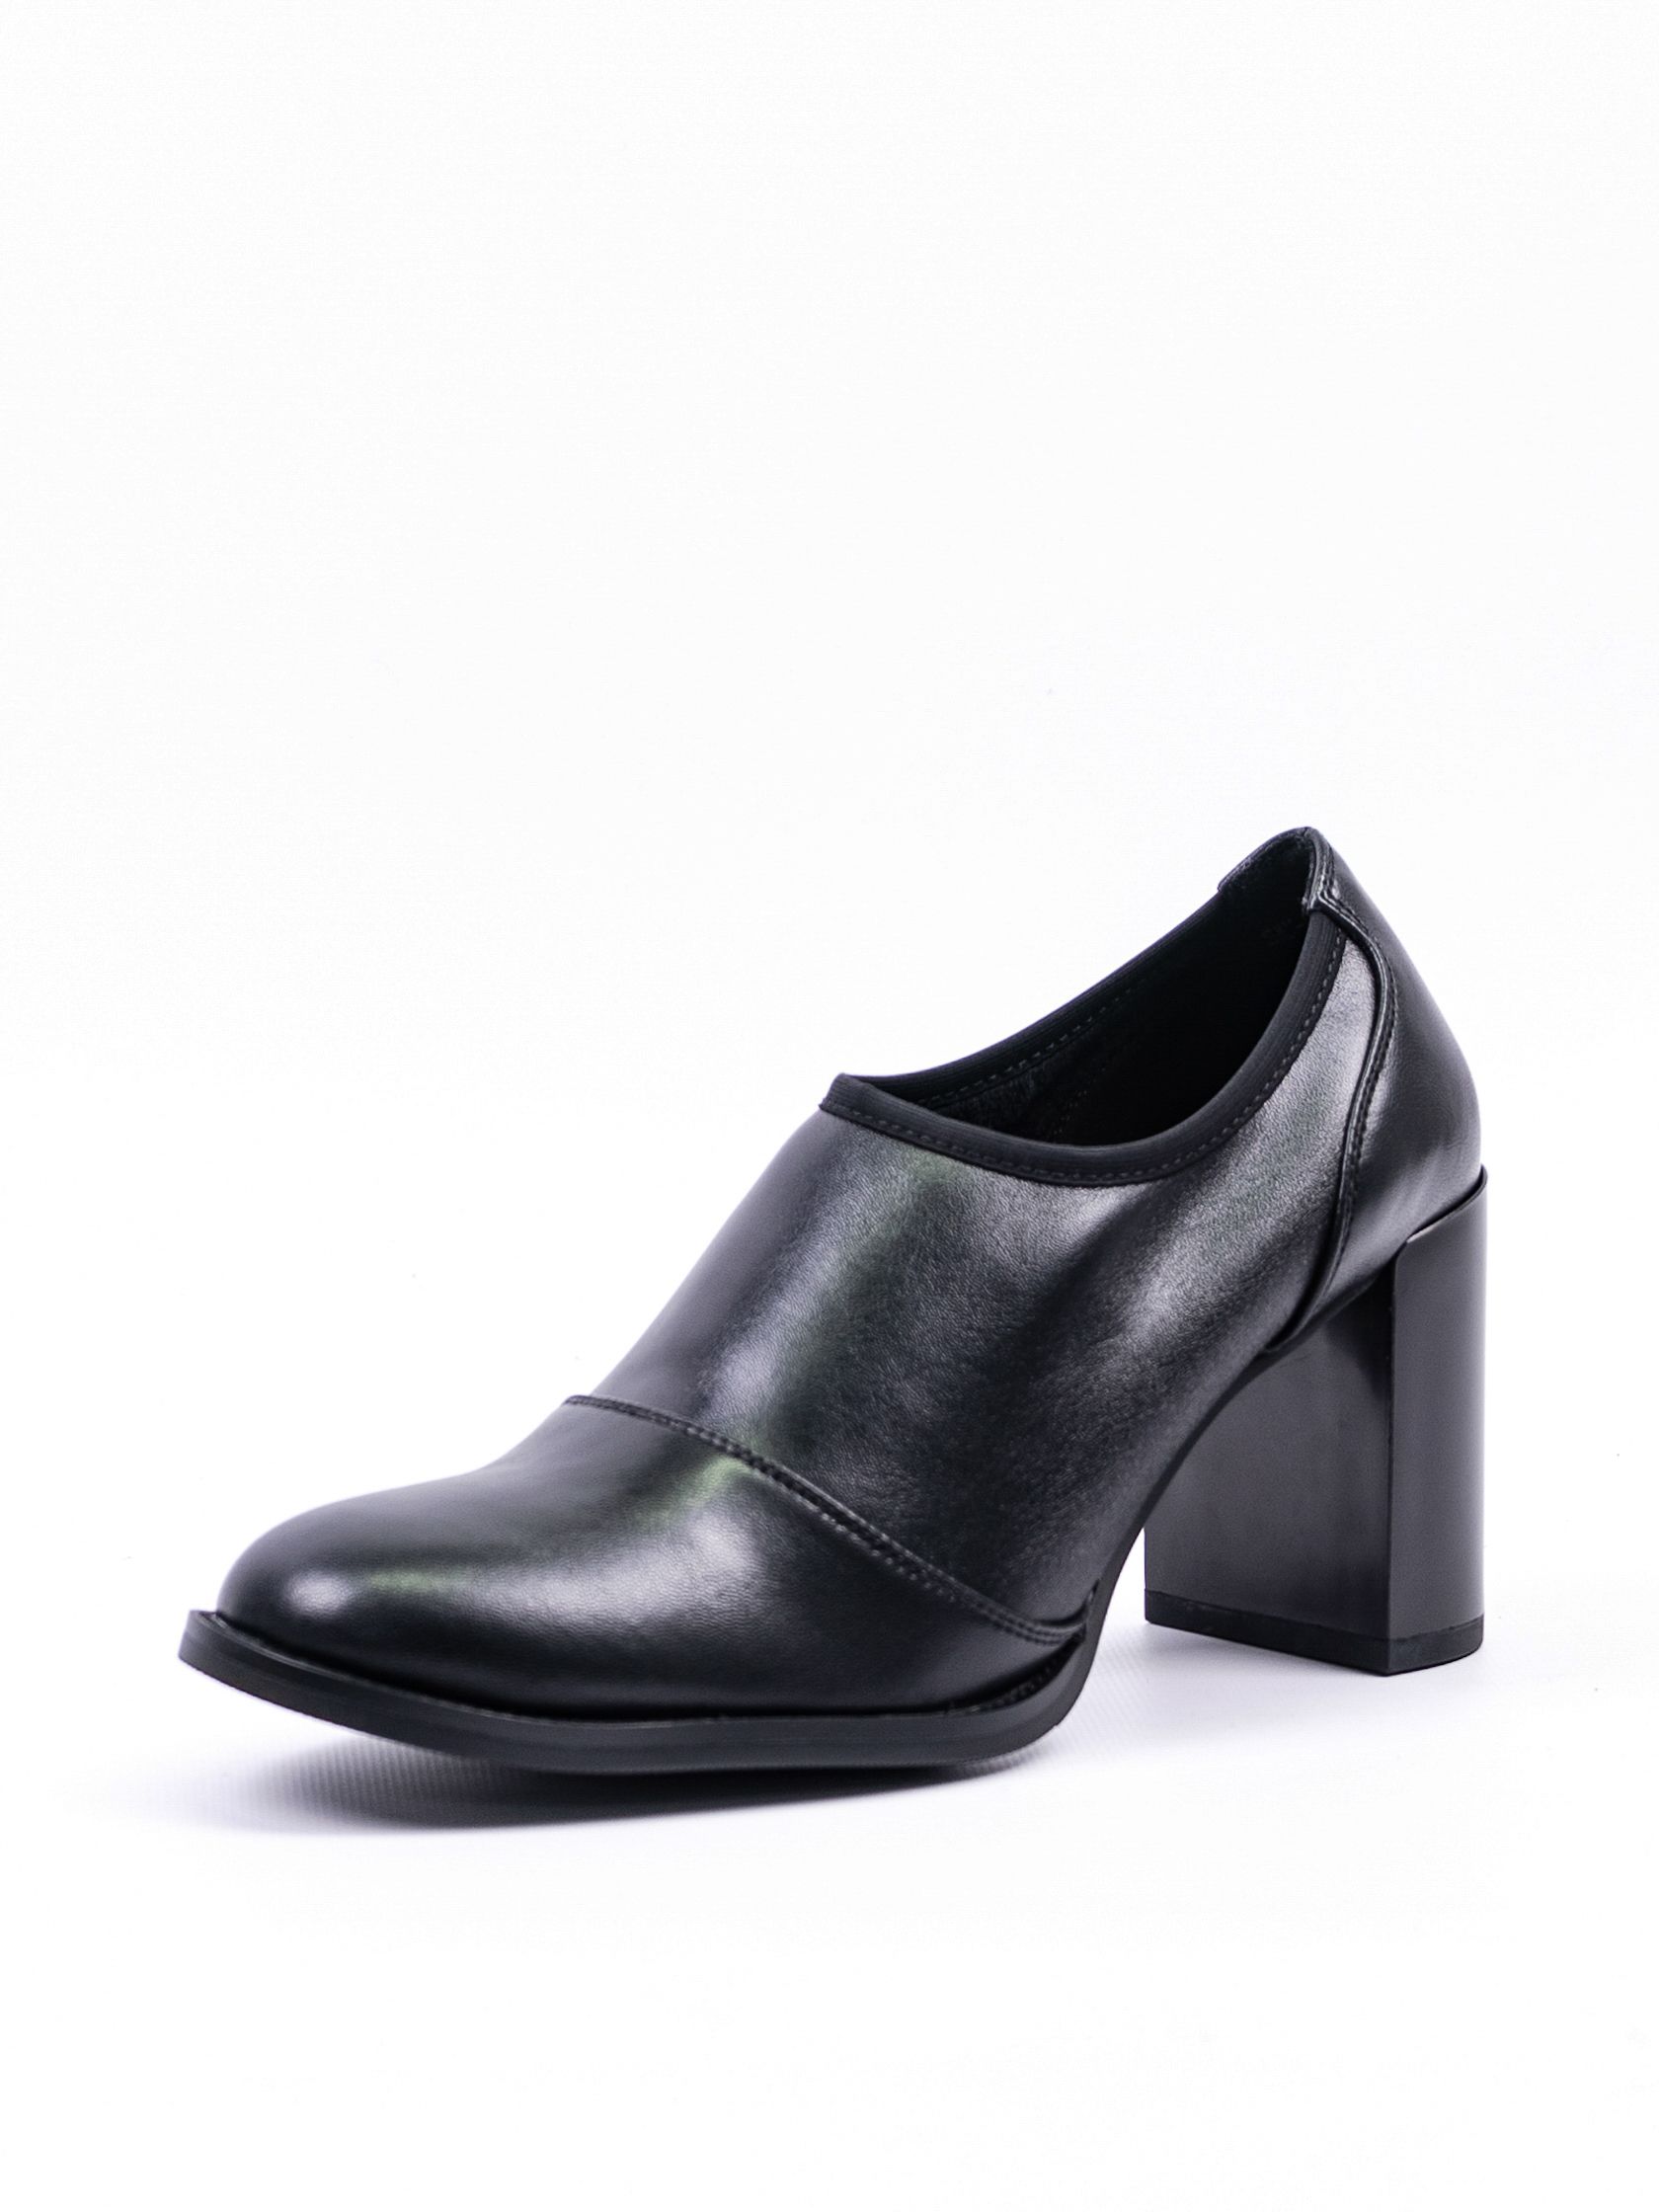 Туфли женские MADELLA SMX-MXW09-0301-ST черные 37 RU